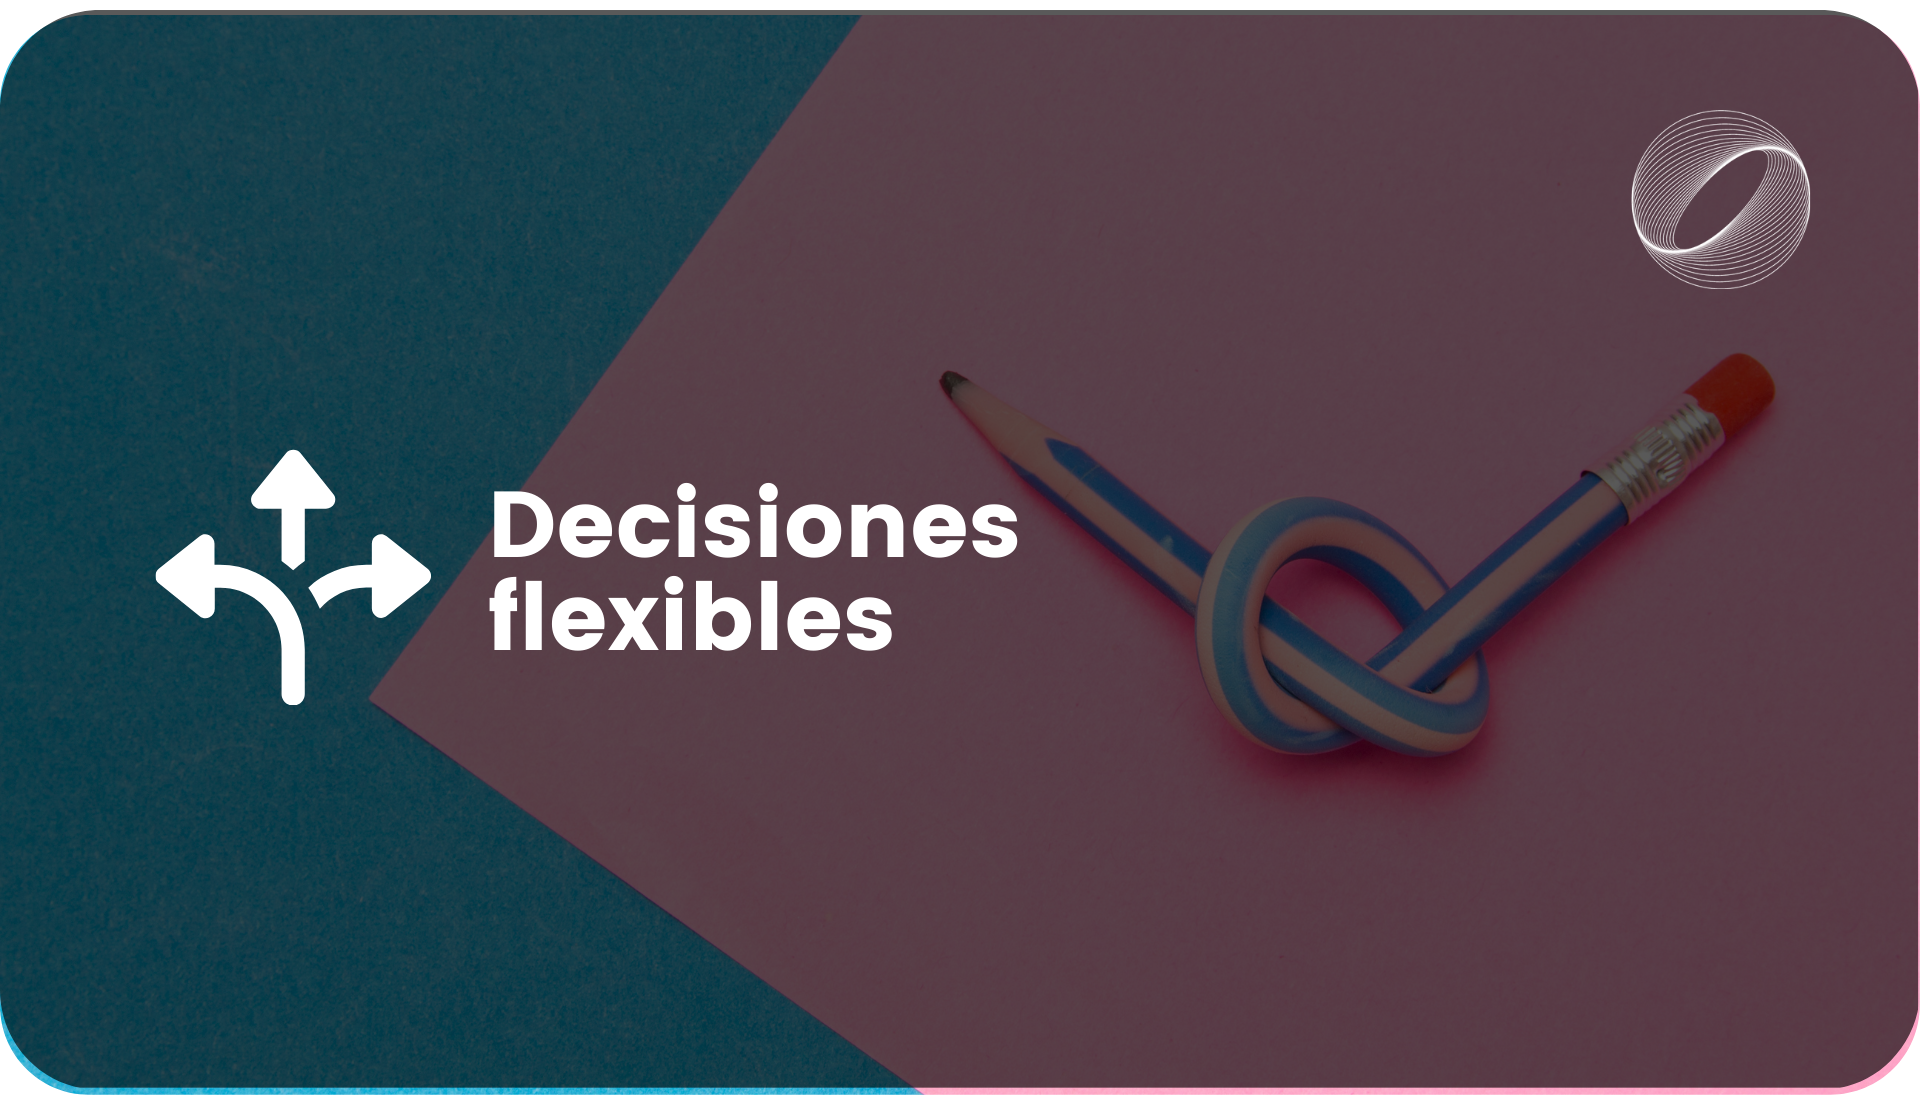 Decisiones flexibles - conductas del consumidor para el 2023